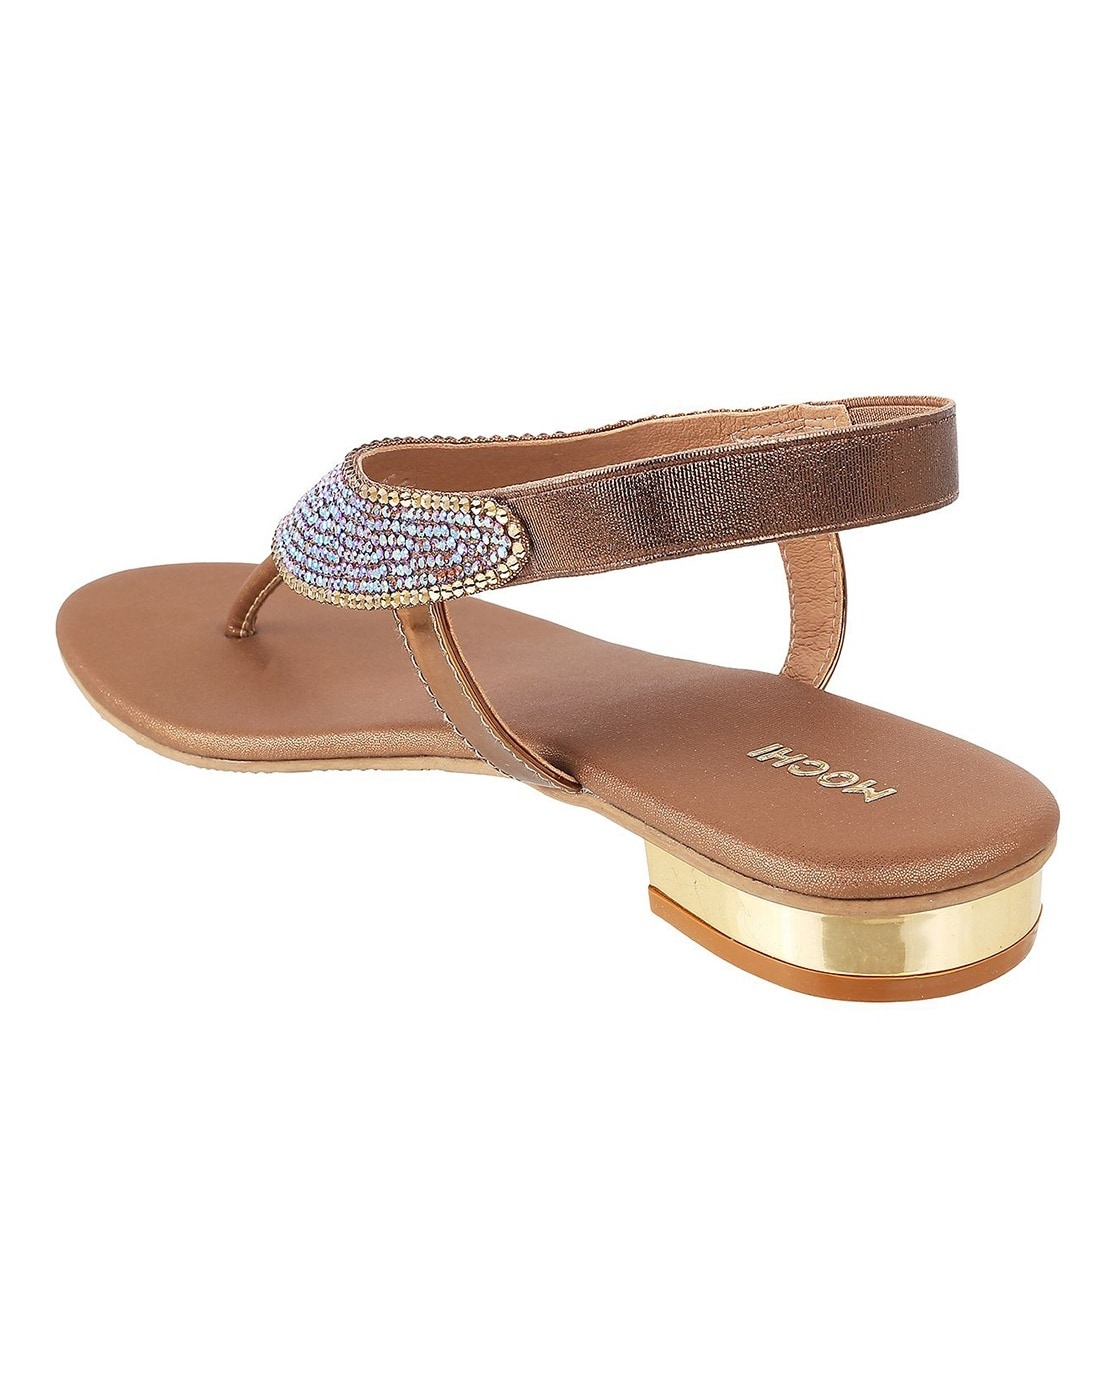 Jelly Shoes New Women Sandals Comfort Women Shoes Pvc Flat Sandals,  Designer Sandal, Women Sandal, fancy sandal, लेडीज सैंडल, महिलाओं की सैंडल  - My Online Collection Store, Bengaluru | ID: 2850804339497